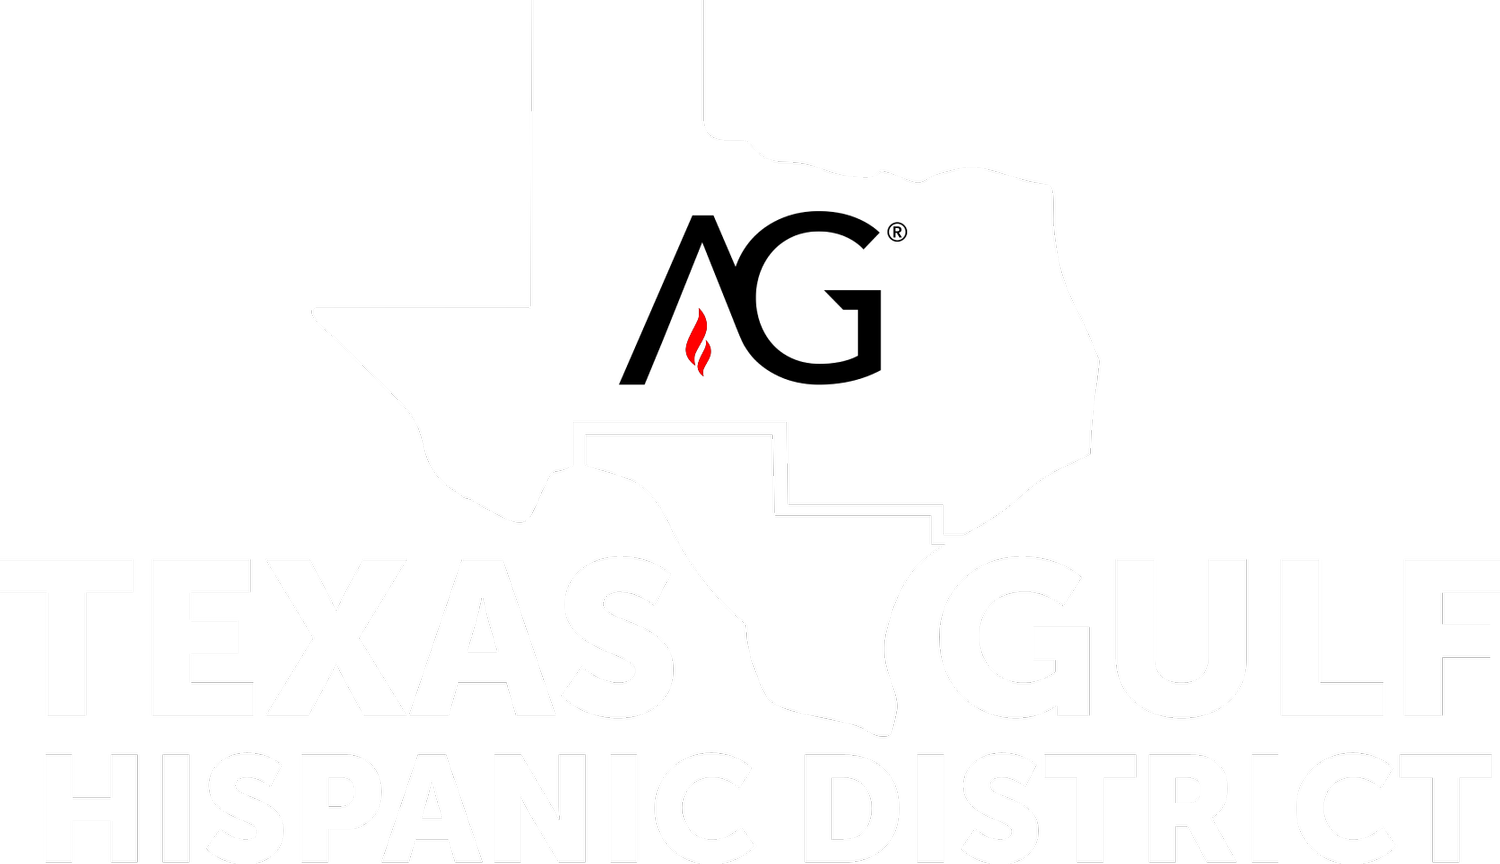 Texas Gulf Hispanic District